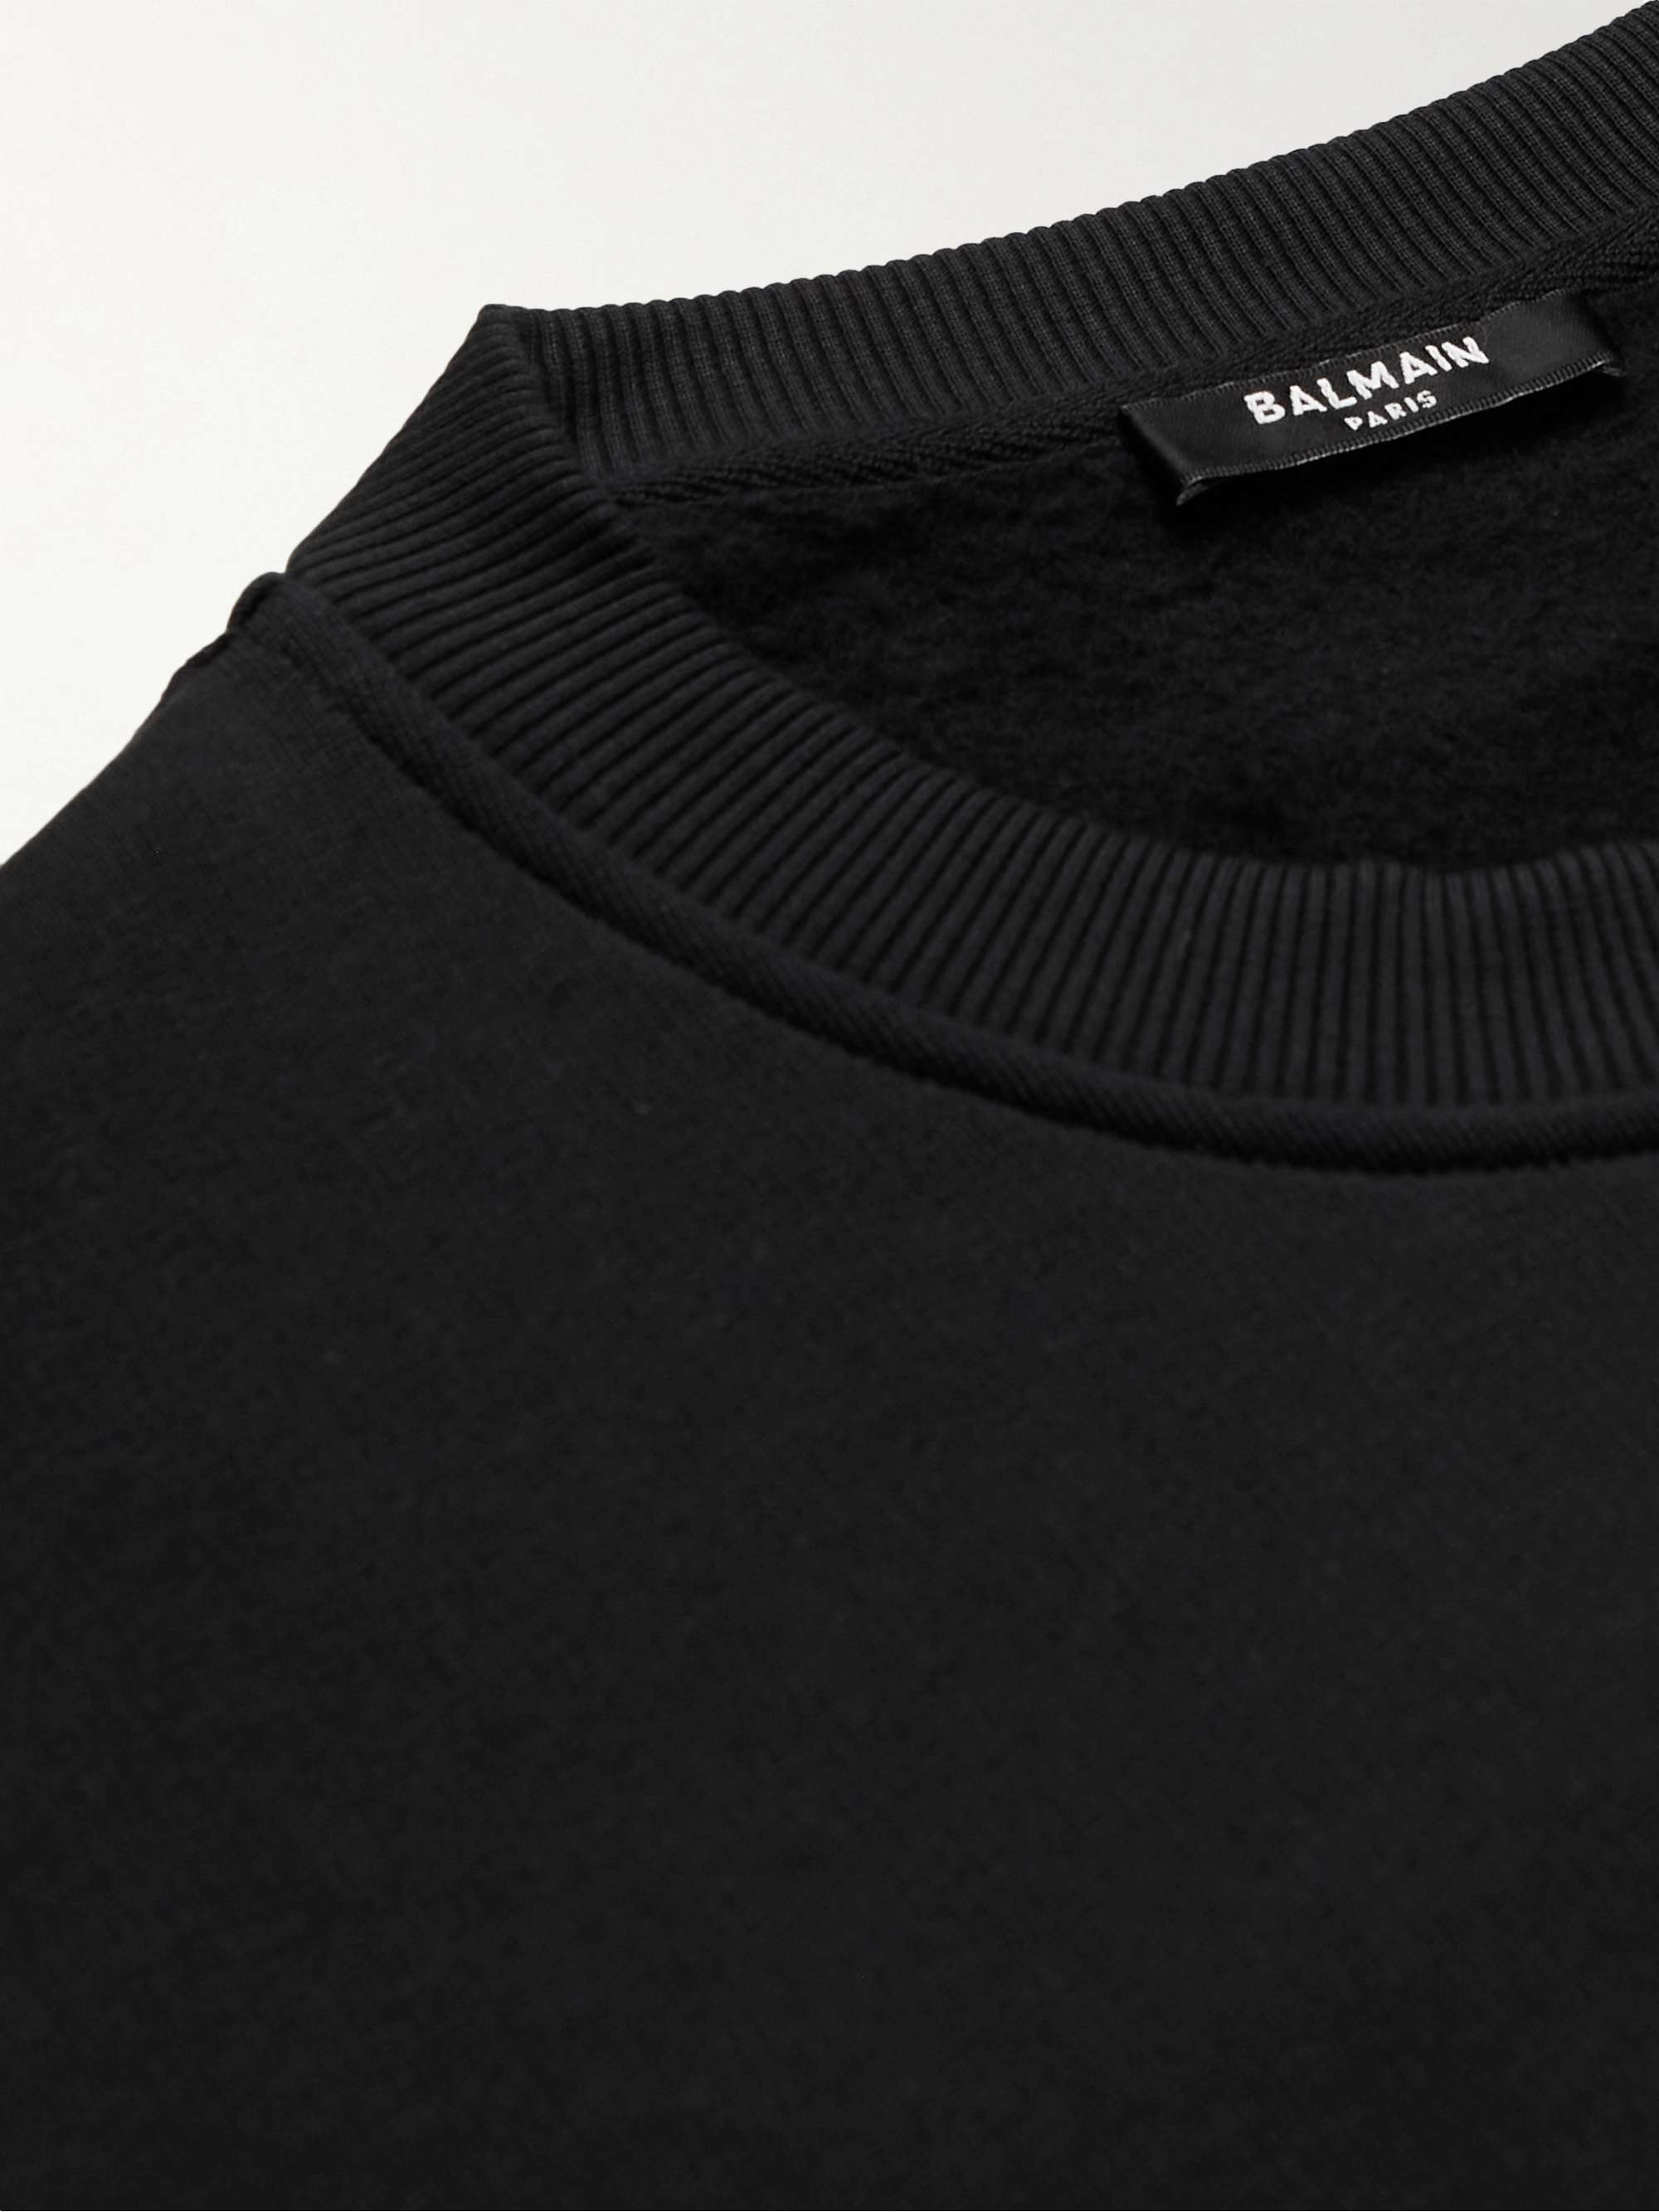 BALMAIN Logo-Embroidered Cotton-Jersey Sweatshirt